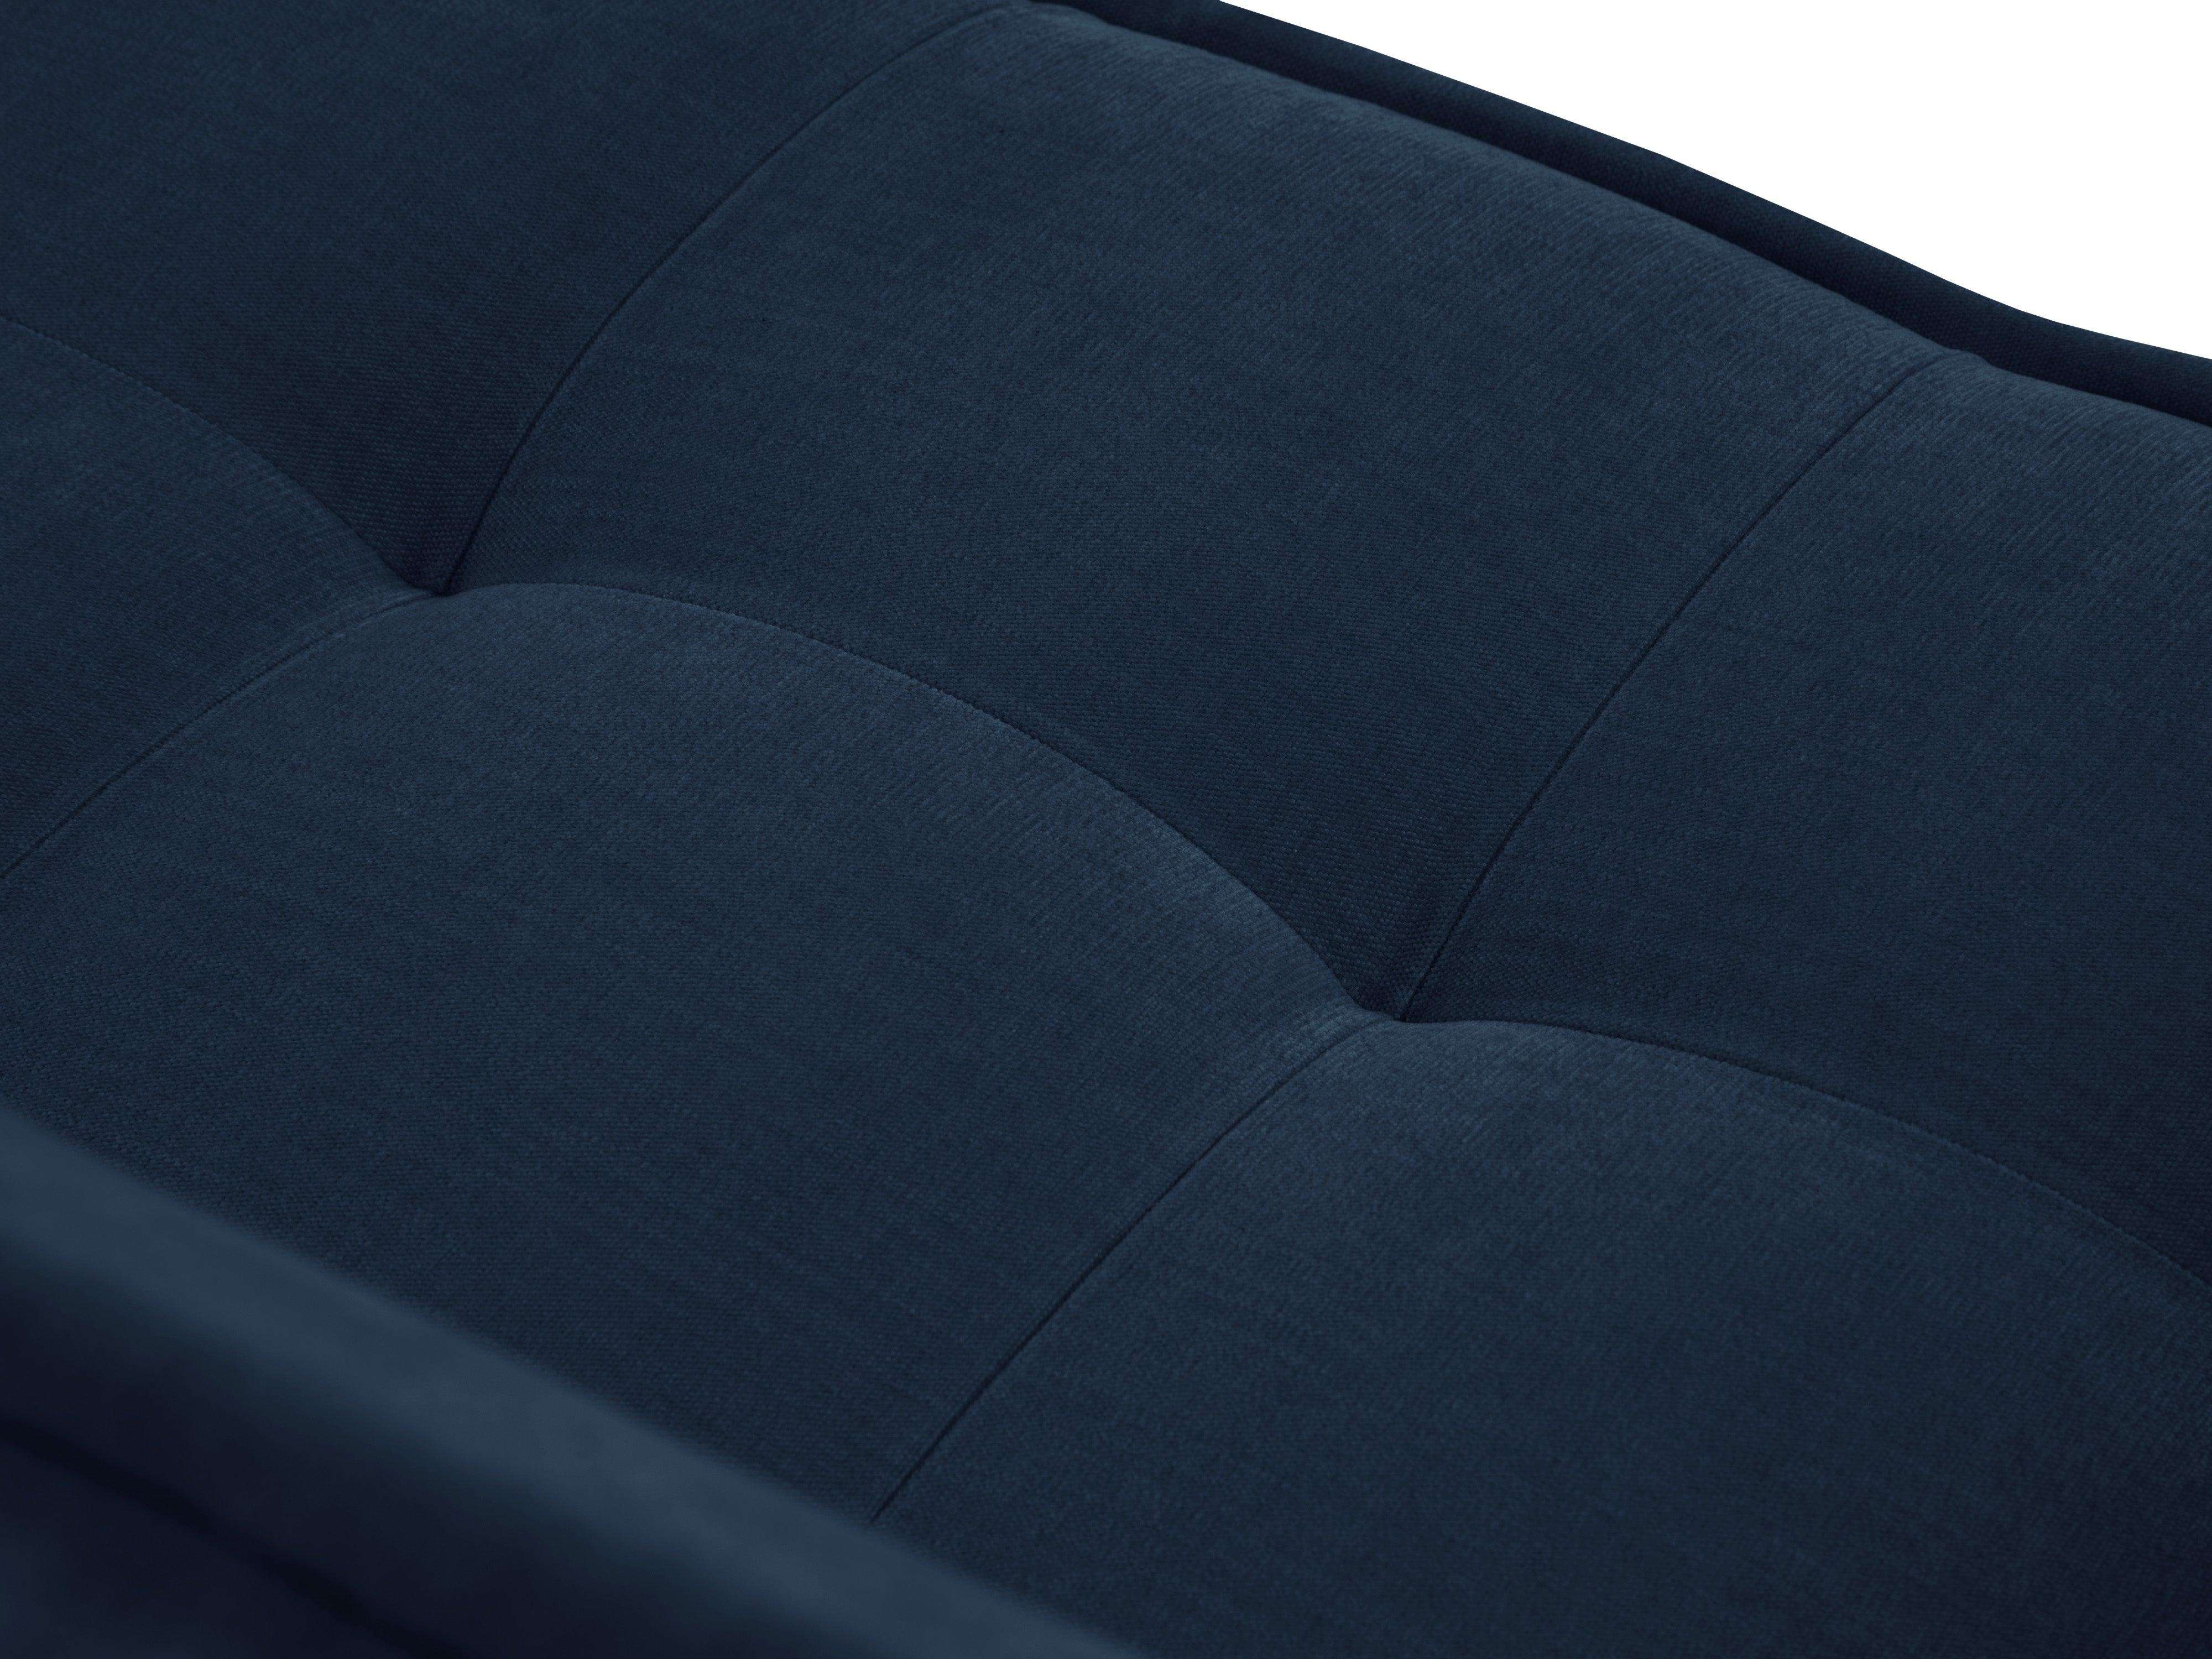 Sofa 3-osobowa VERLET niebieski Interieurs 86    Eye on Design